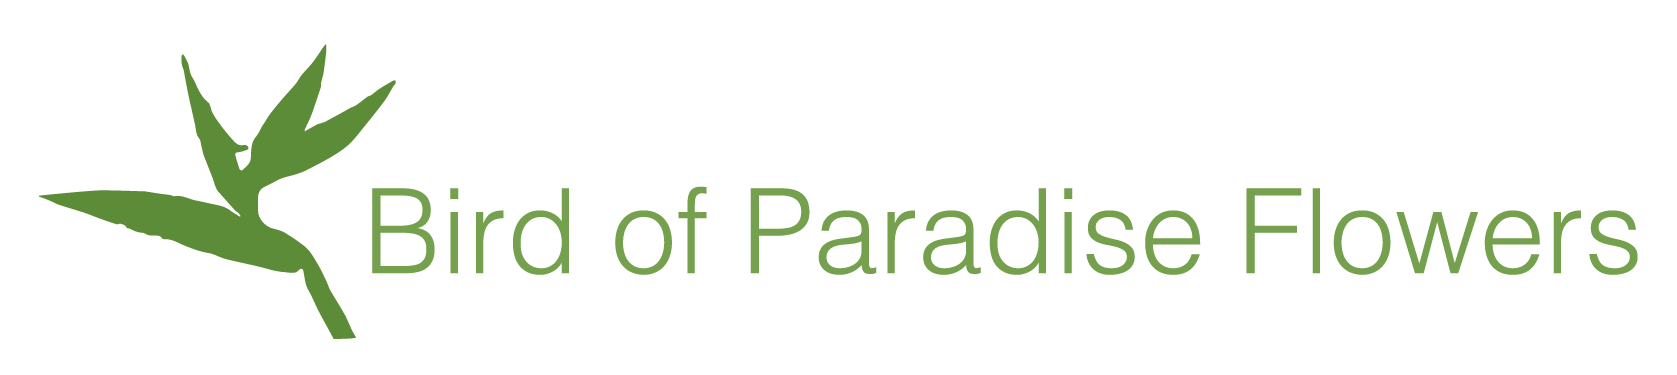 Bird of Paradise Flower Logo - Bristol Florist Bird Of Paradise Flowers Voted #1 Best Florist